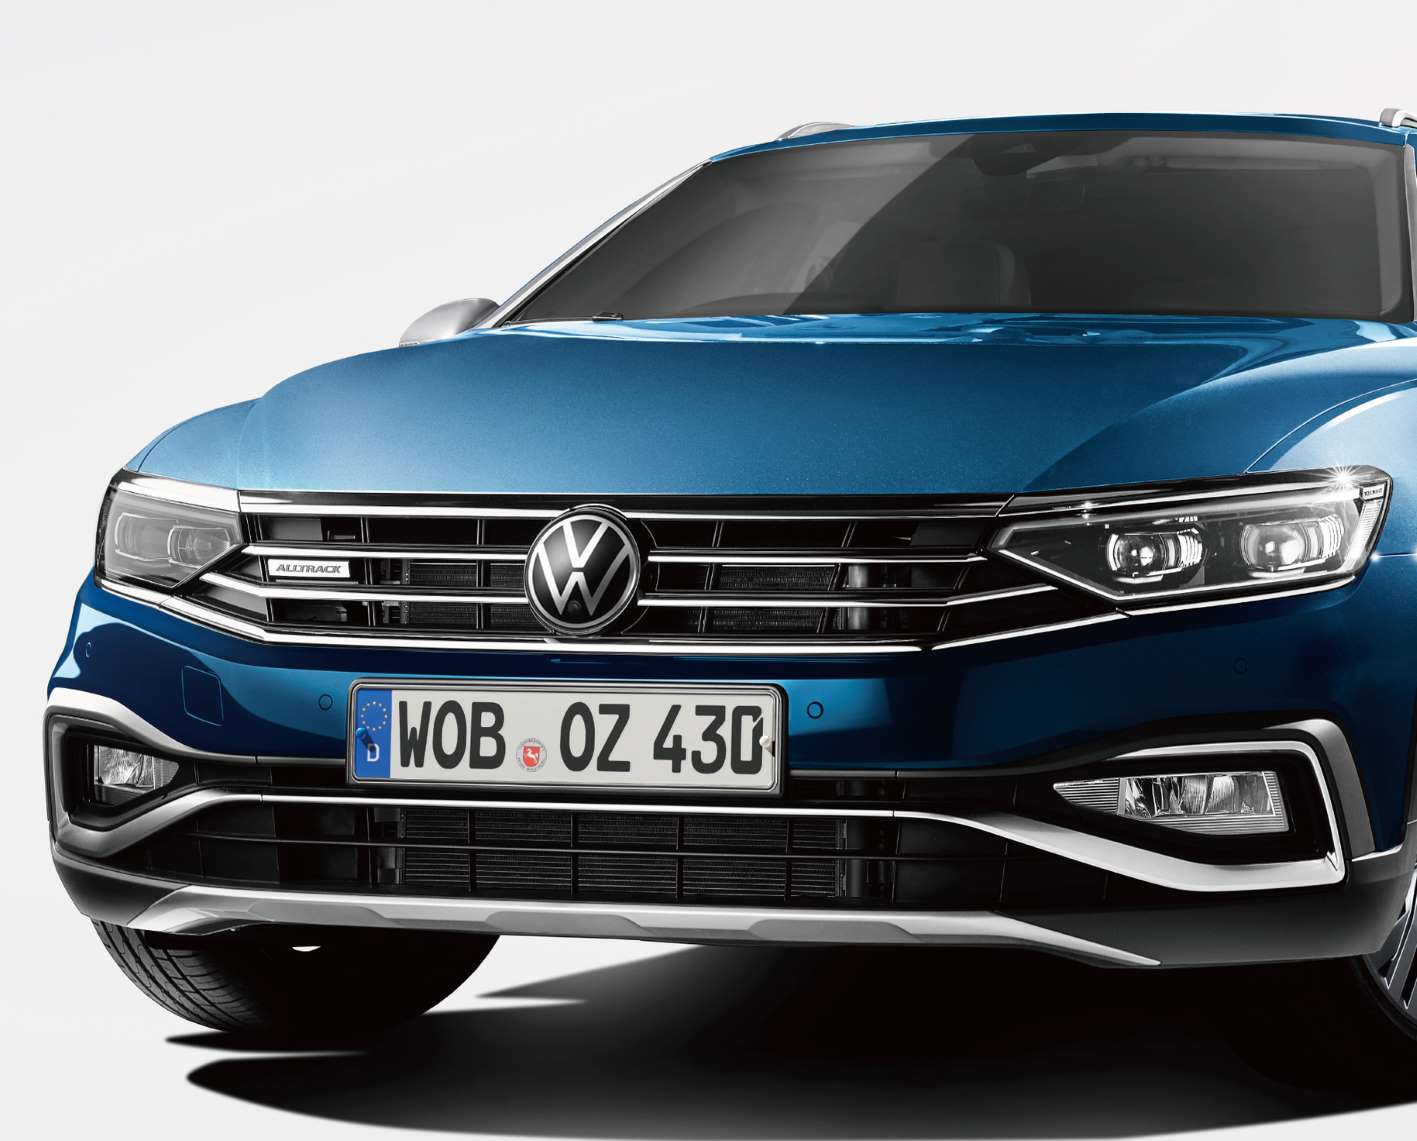 VW上級モデル パサートがマイナーチェンジへ デジタル化を強化して発売!! - 自動車情報誌「ベストカー」